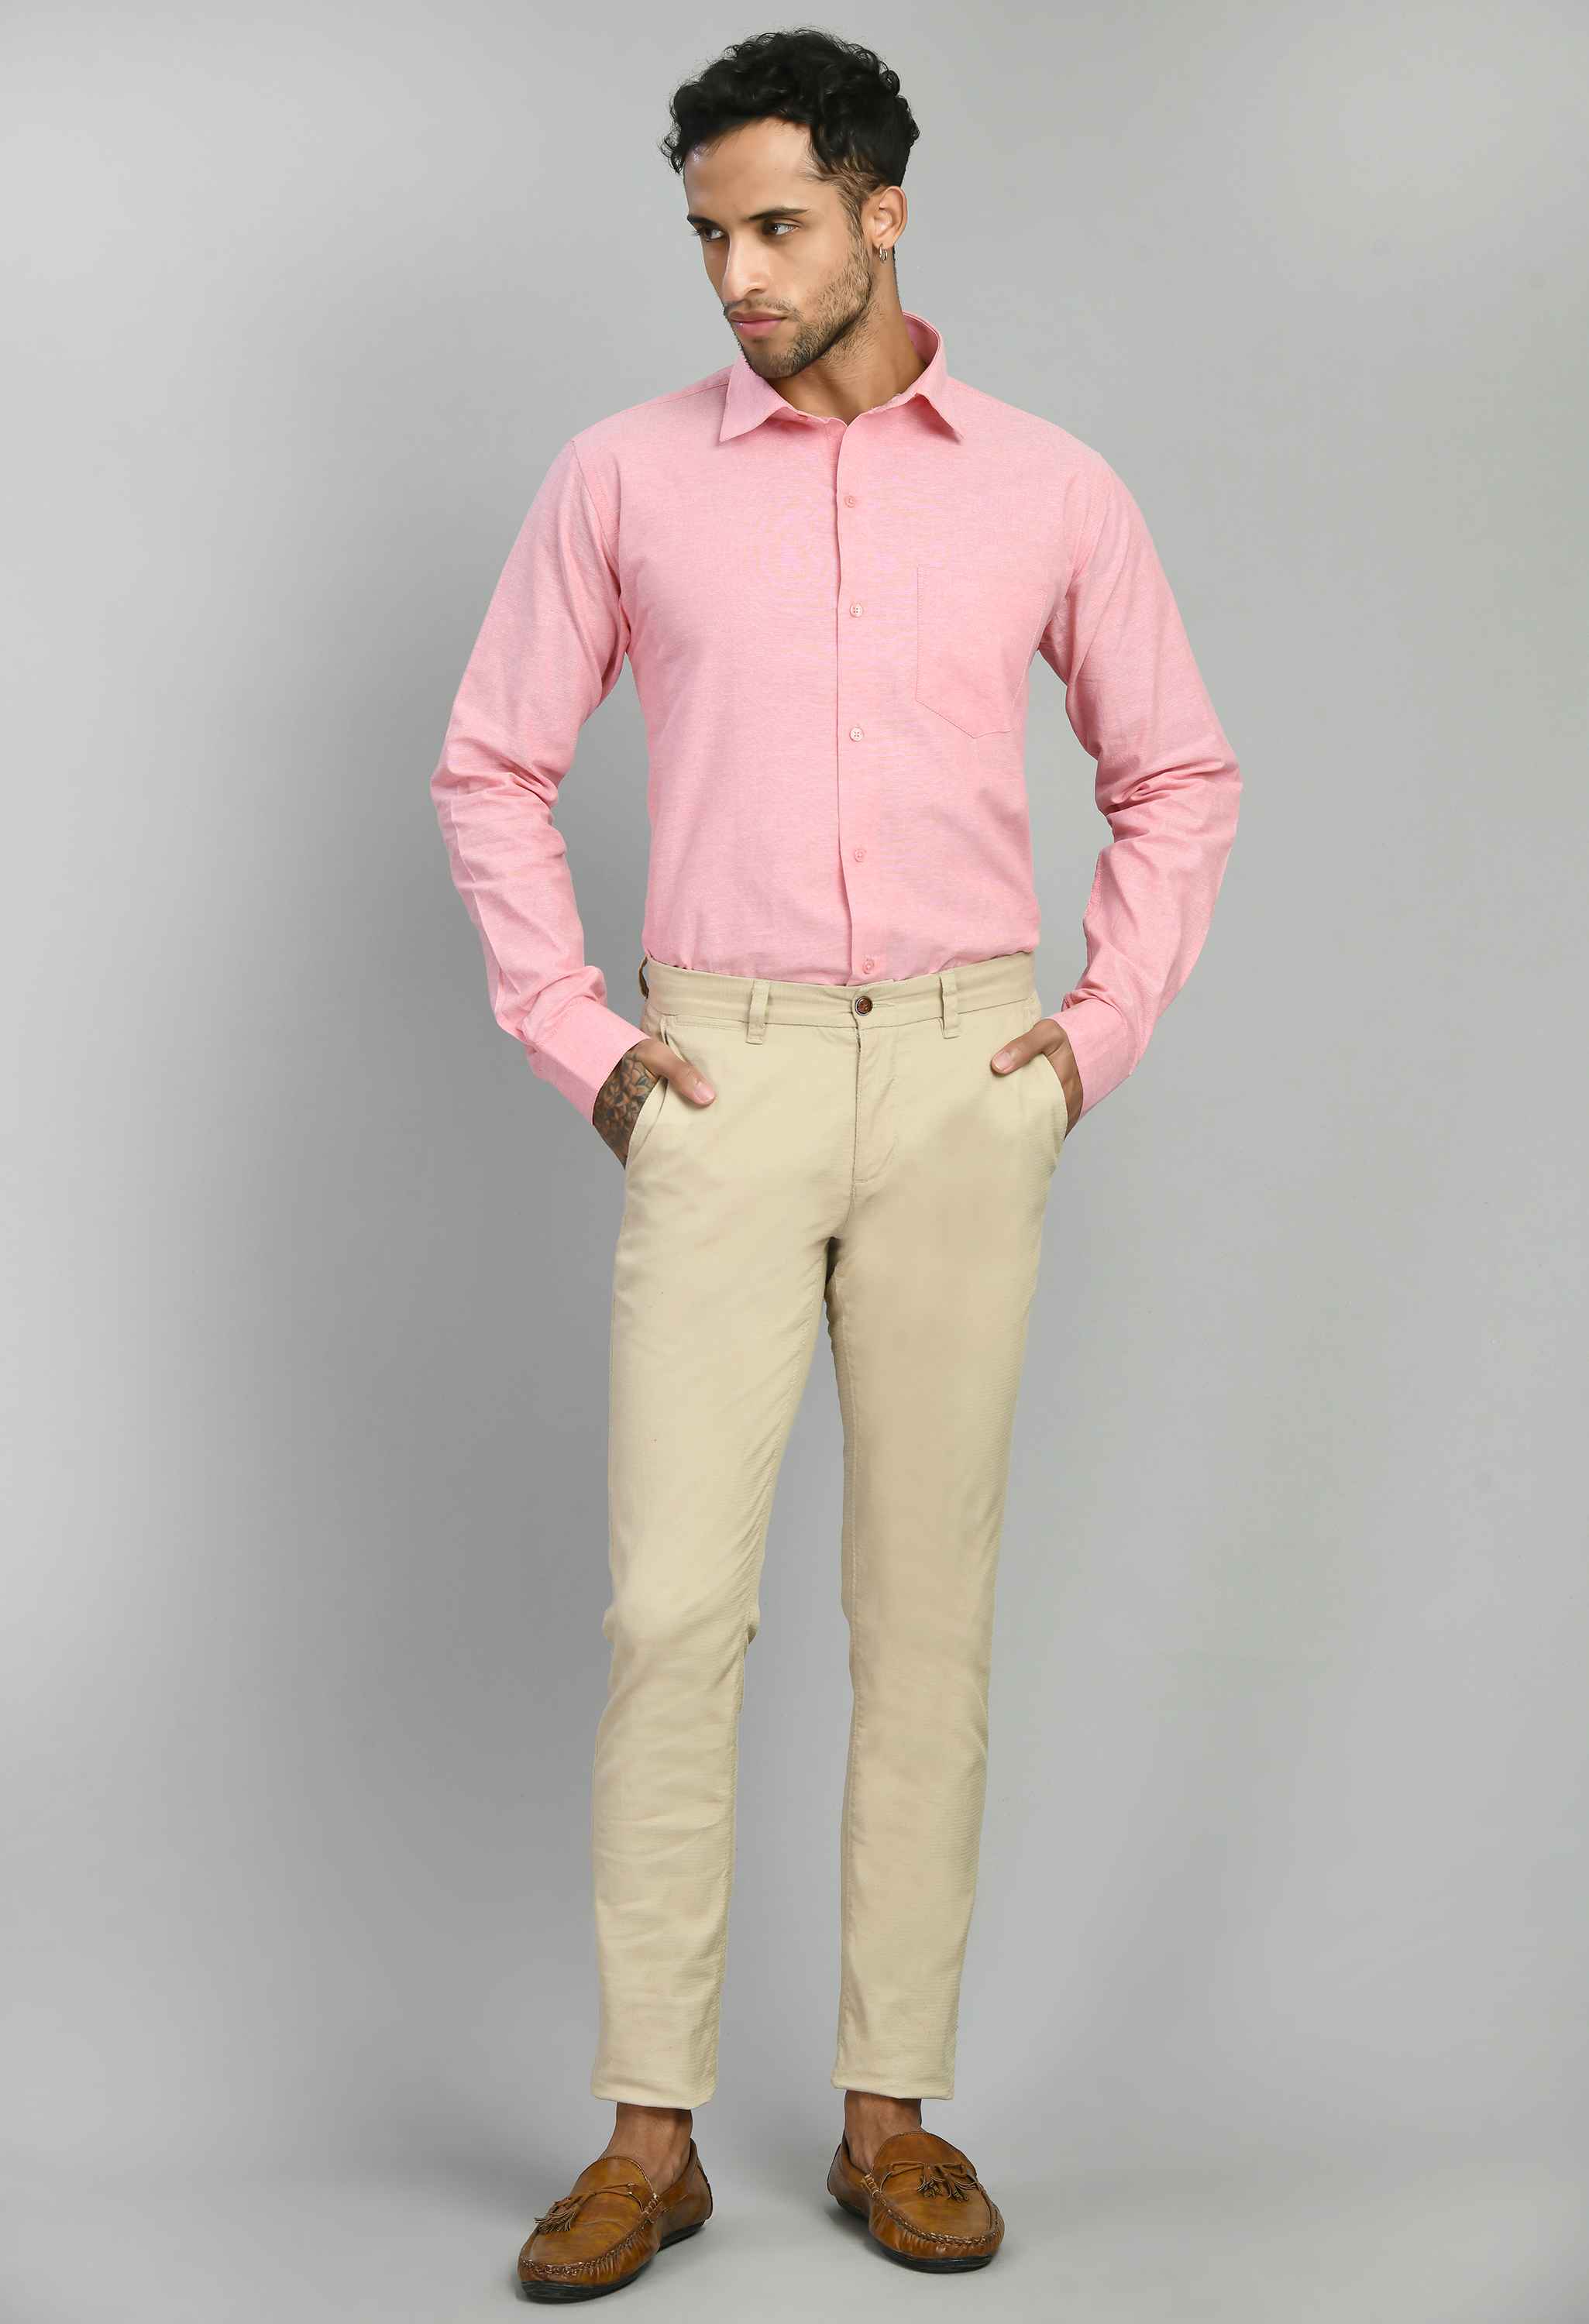 Men's Peach Spread Collar Solid Formal Shirt